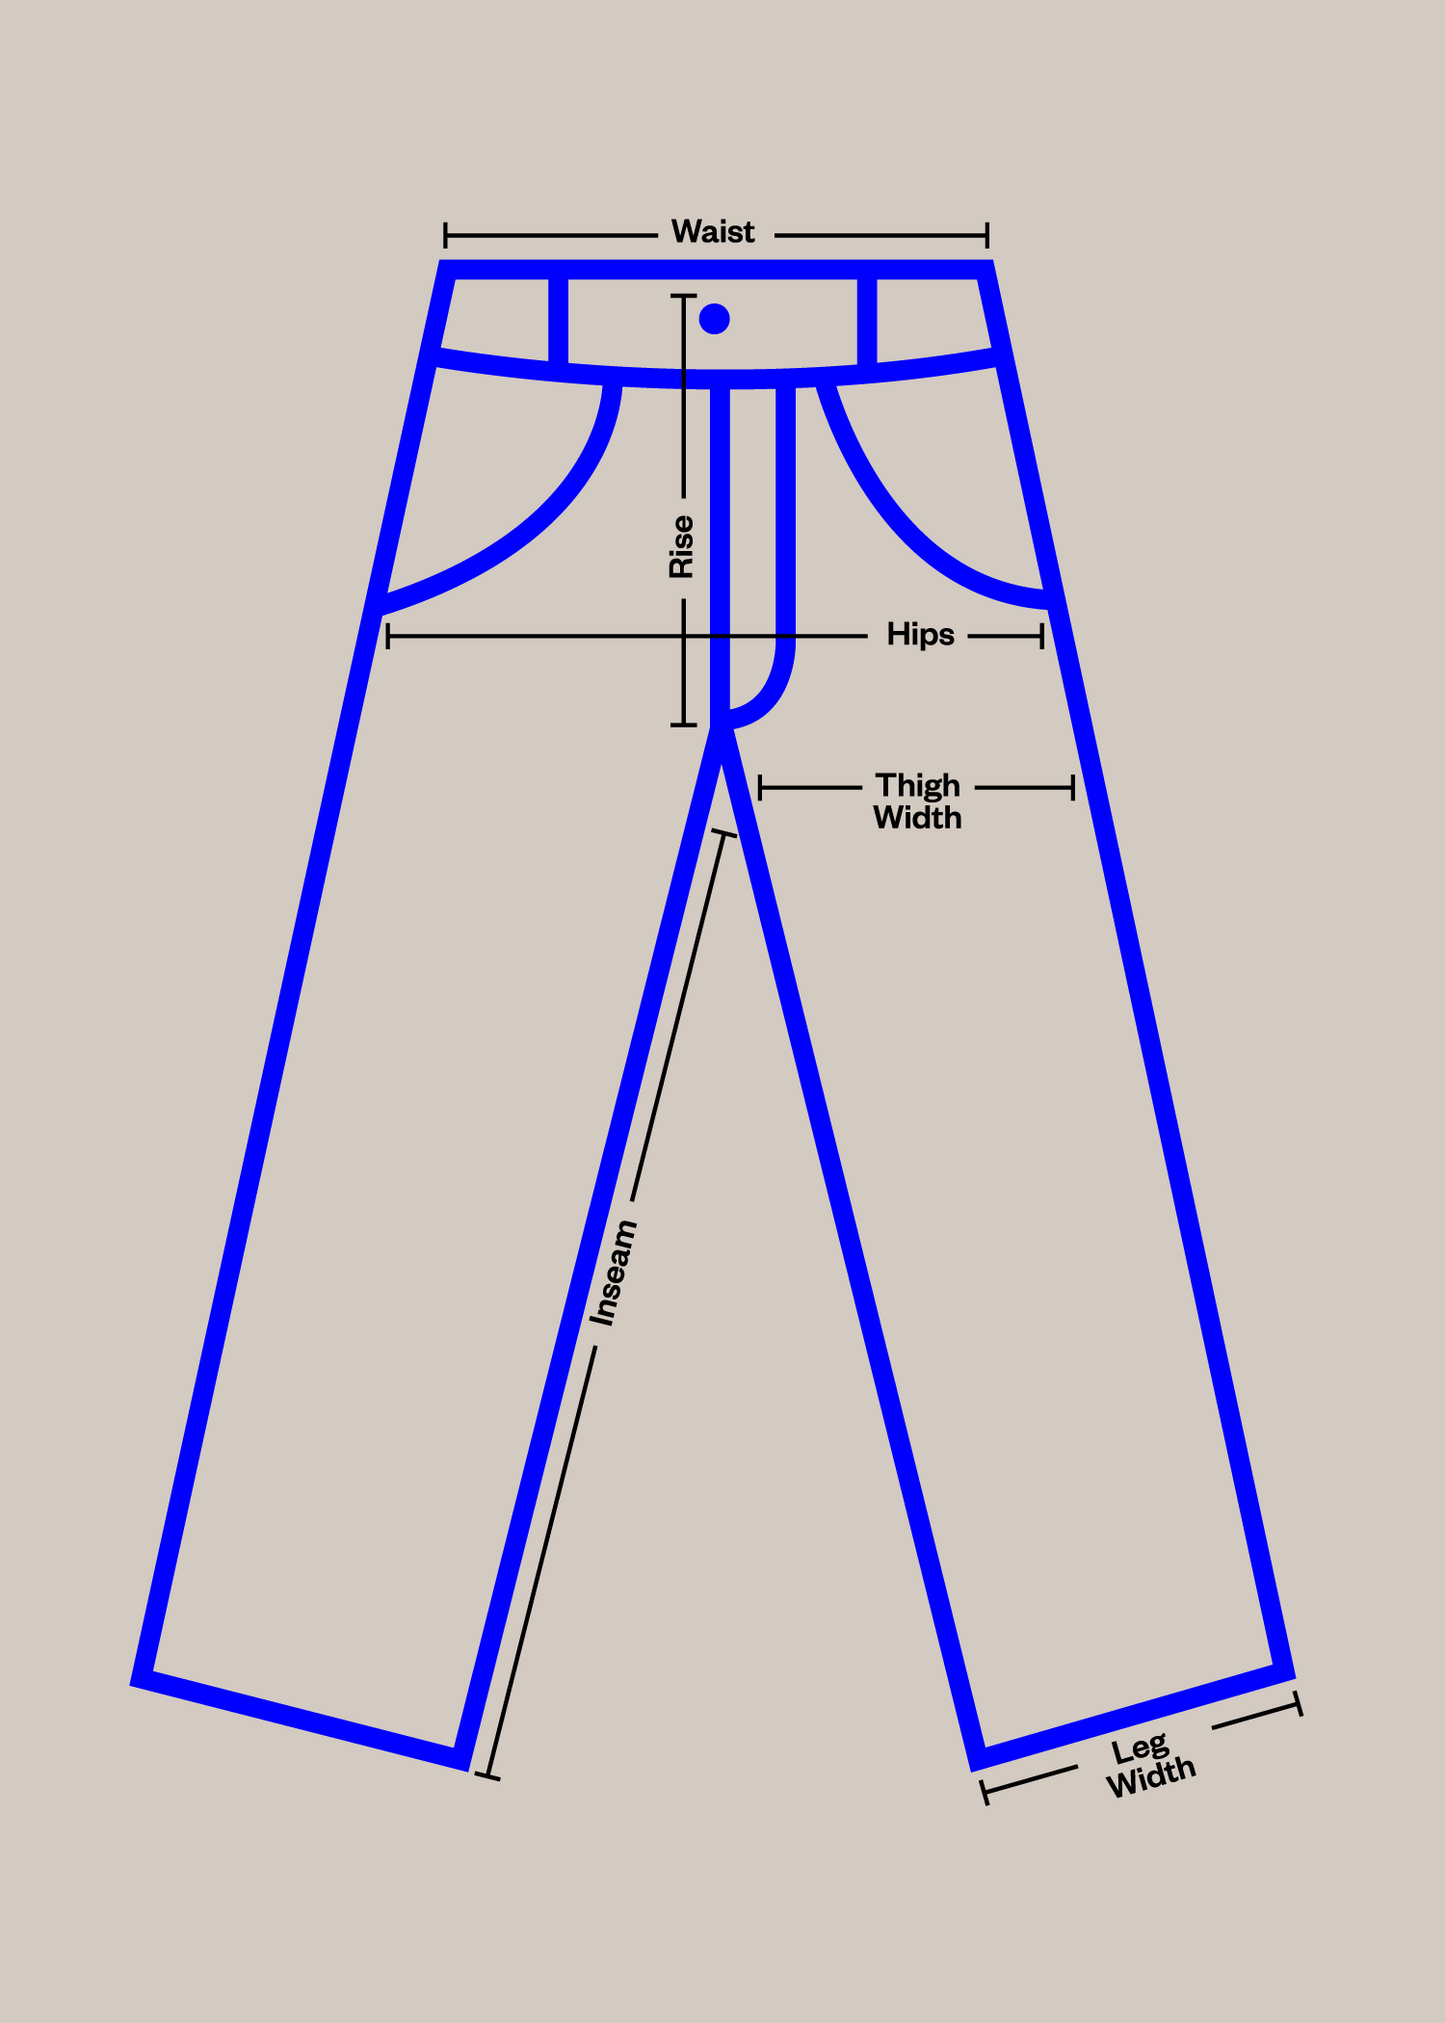 1980s French Workwear Chore Pants Size Women's 34 Men's 36